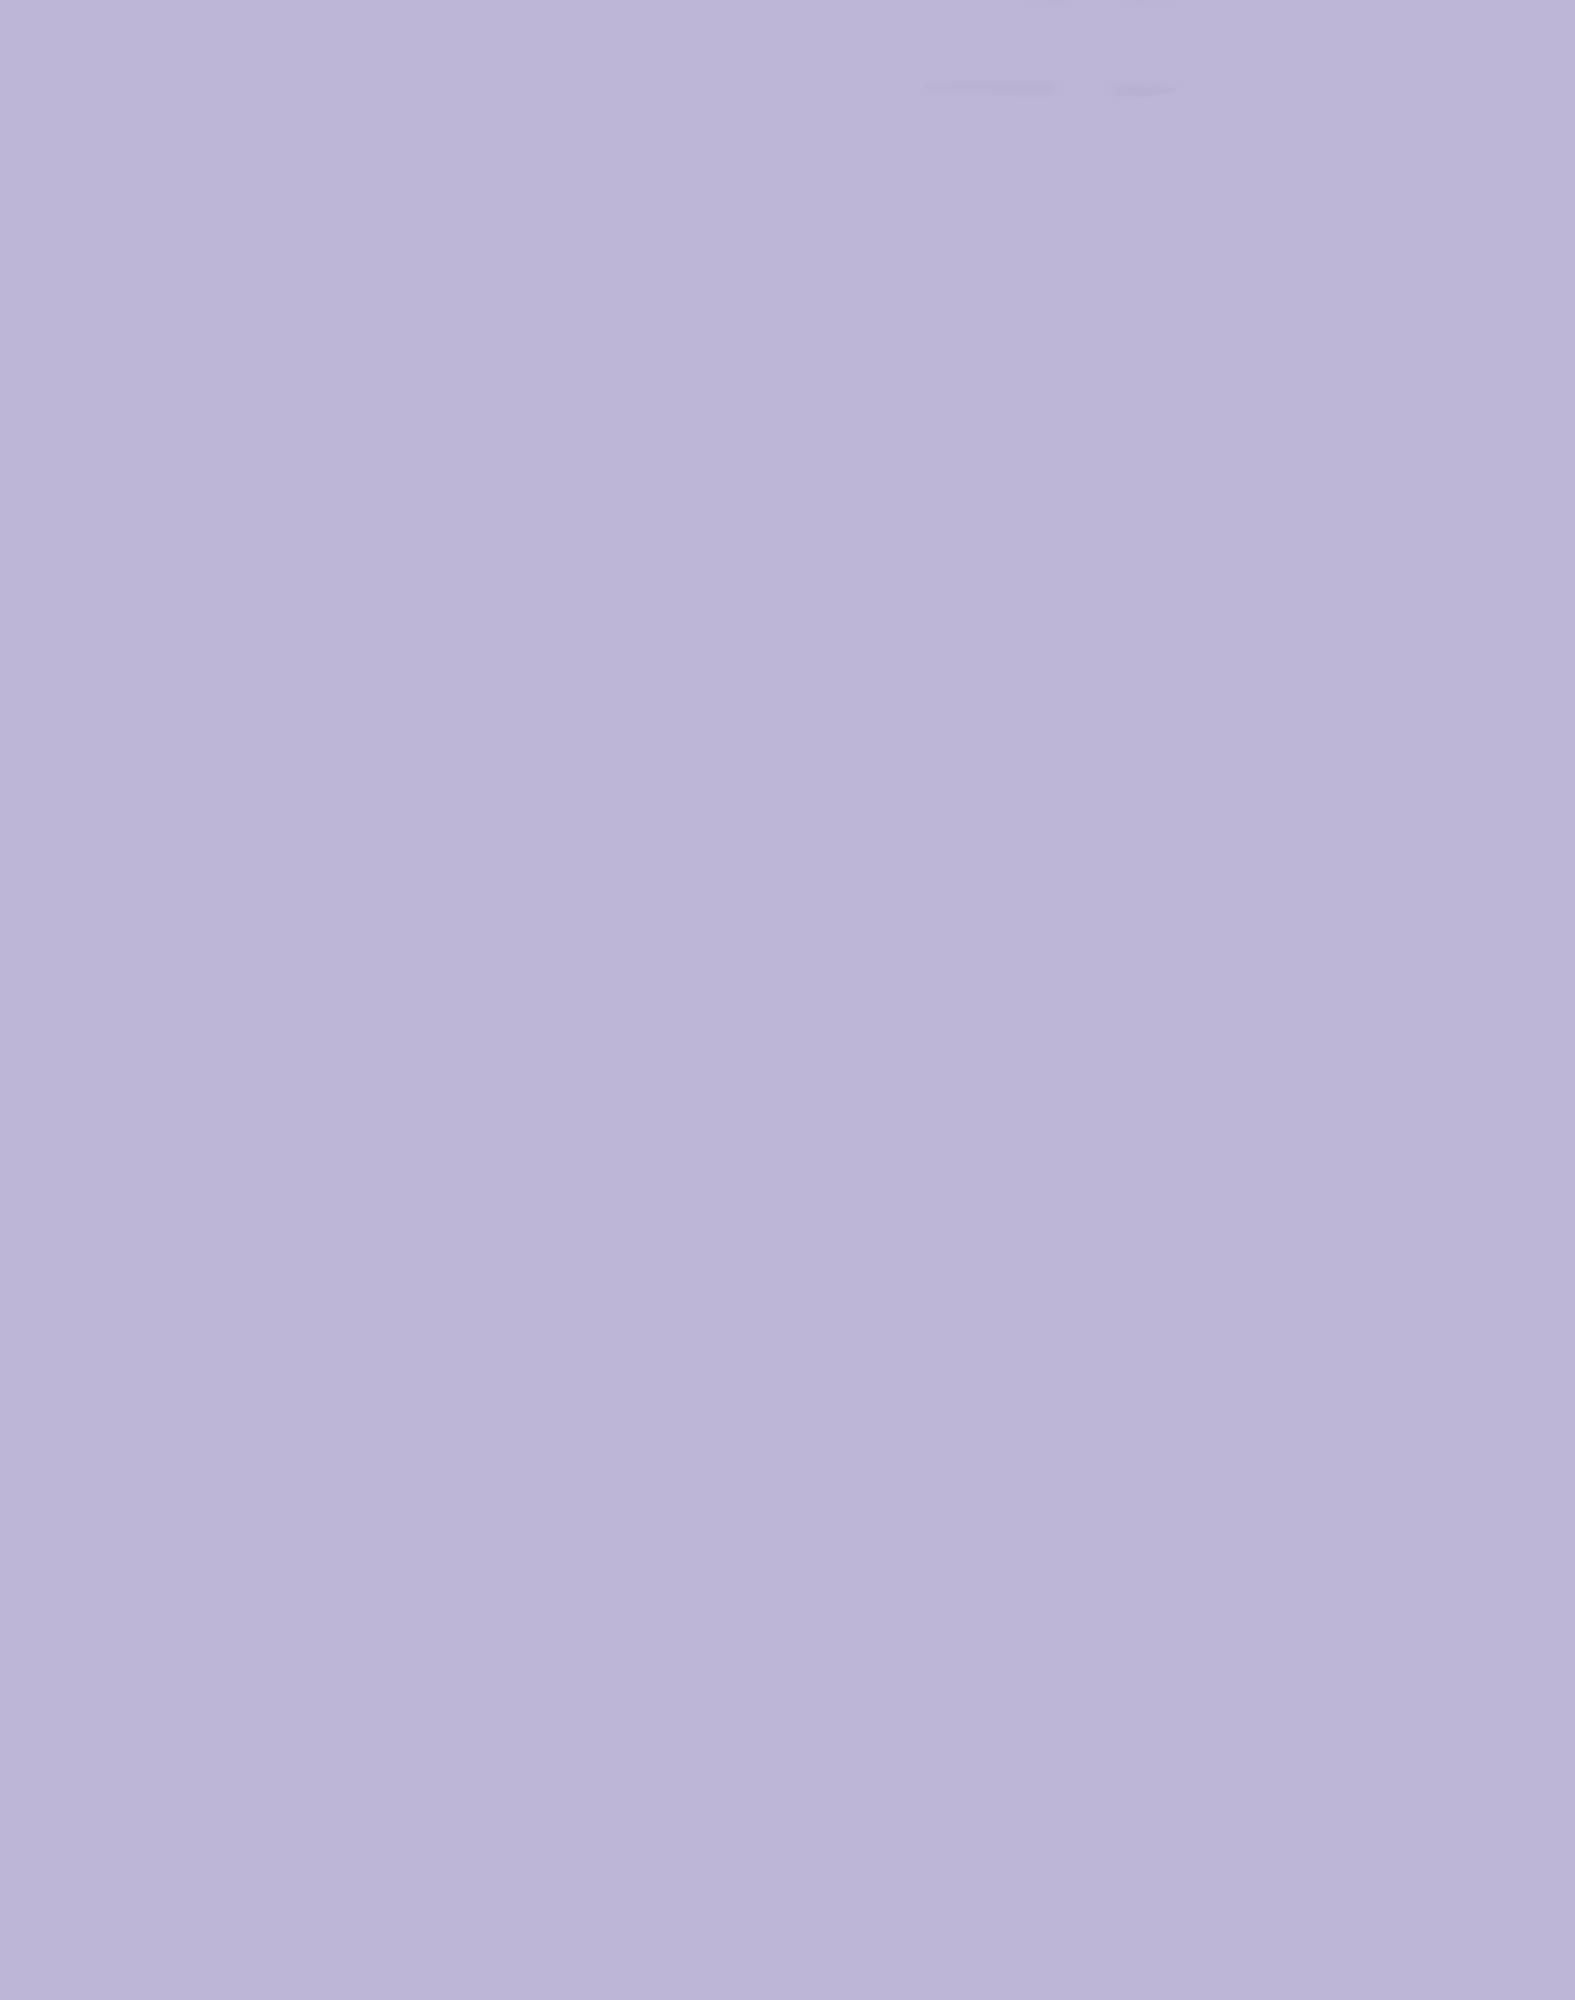 Sweet Lavender 189,182,215